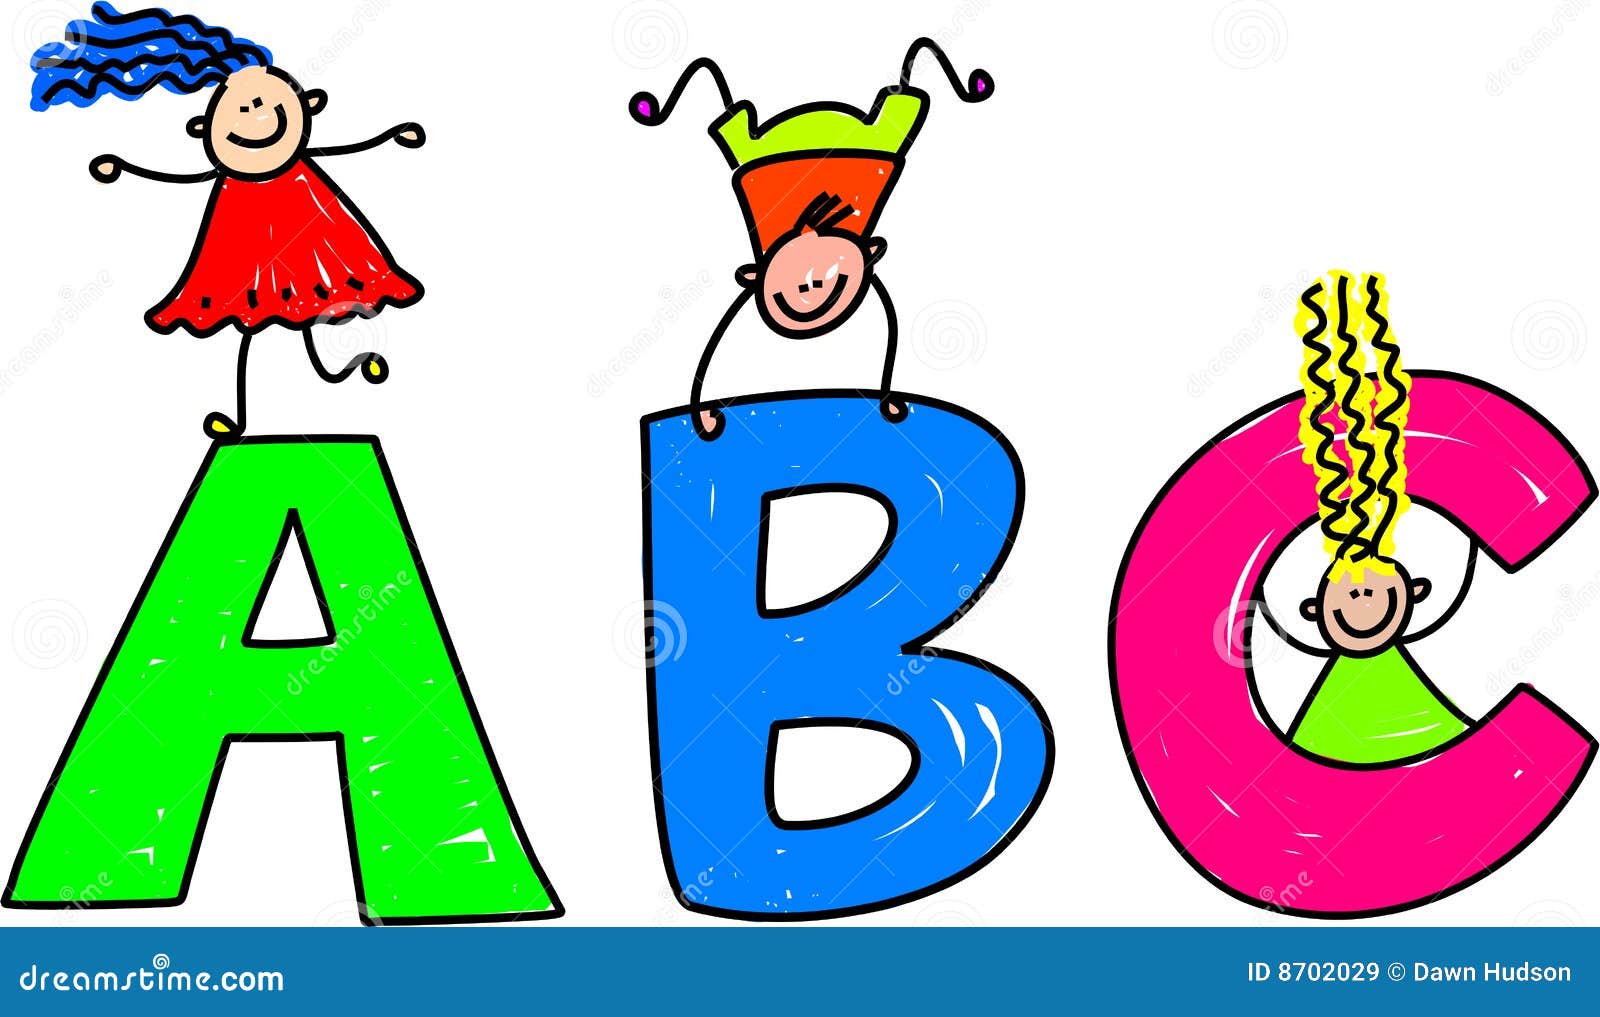 kindergarten alphabet clipart - photo #18